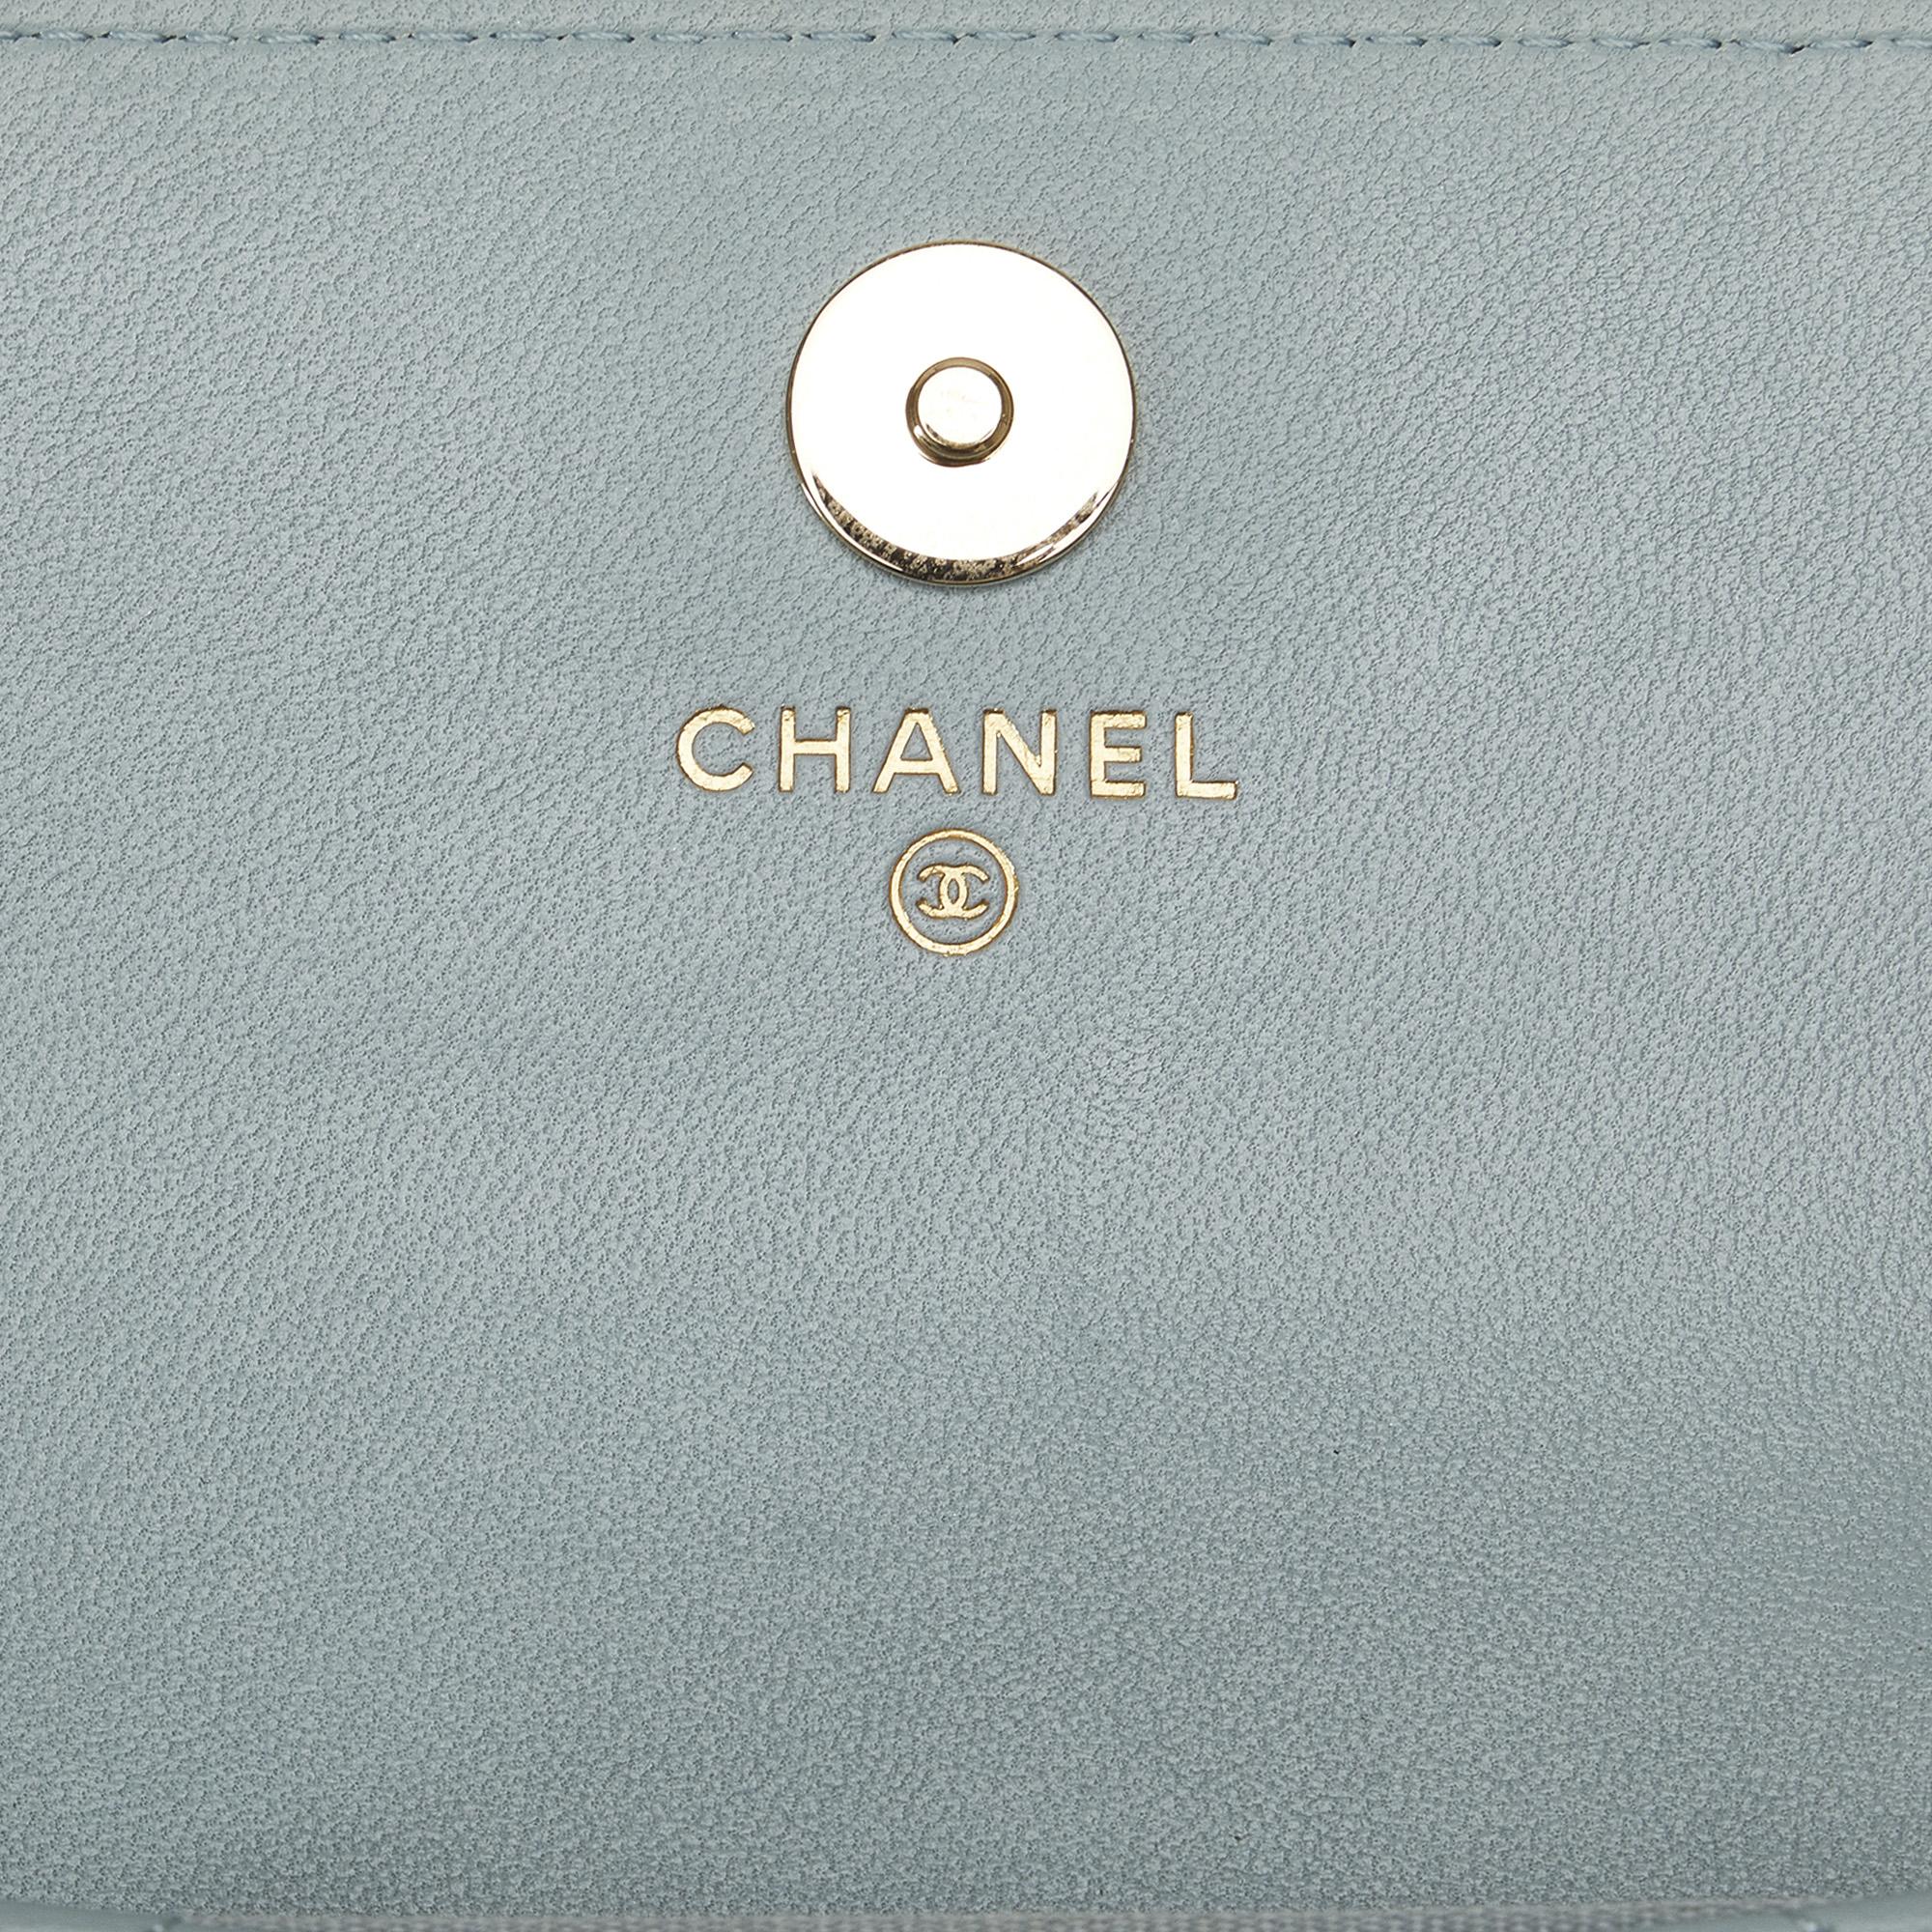 Chanel Blue Pearl Chain Card Case